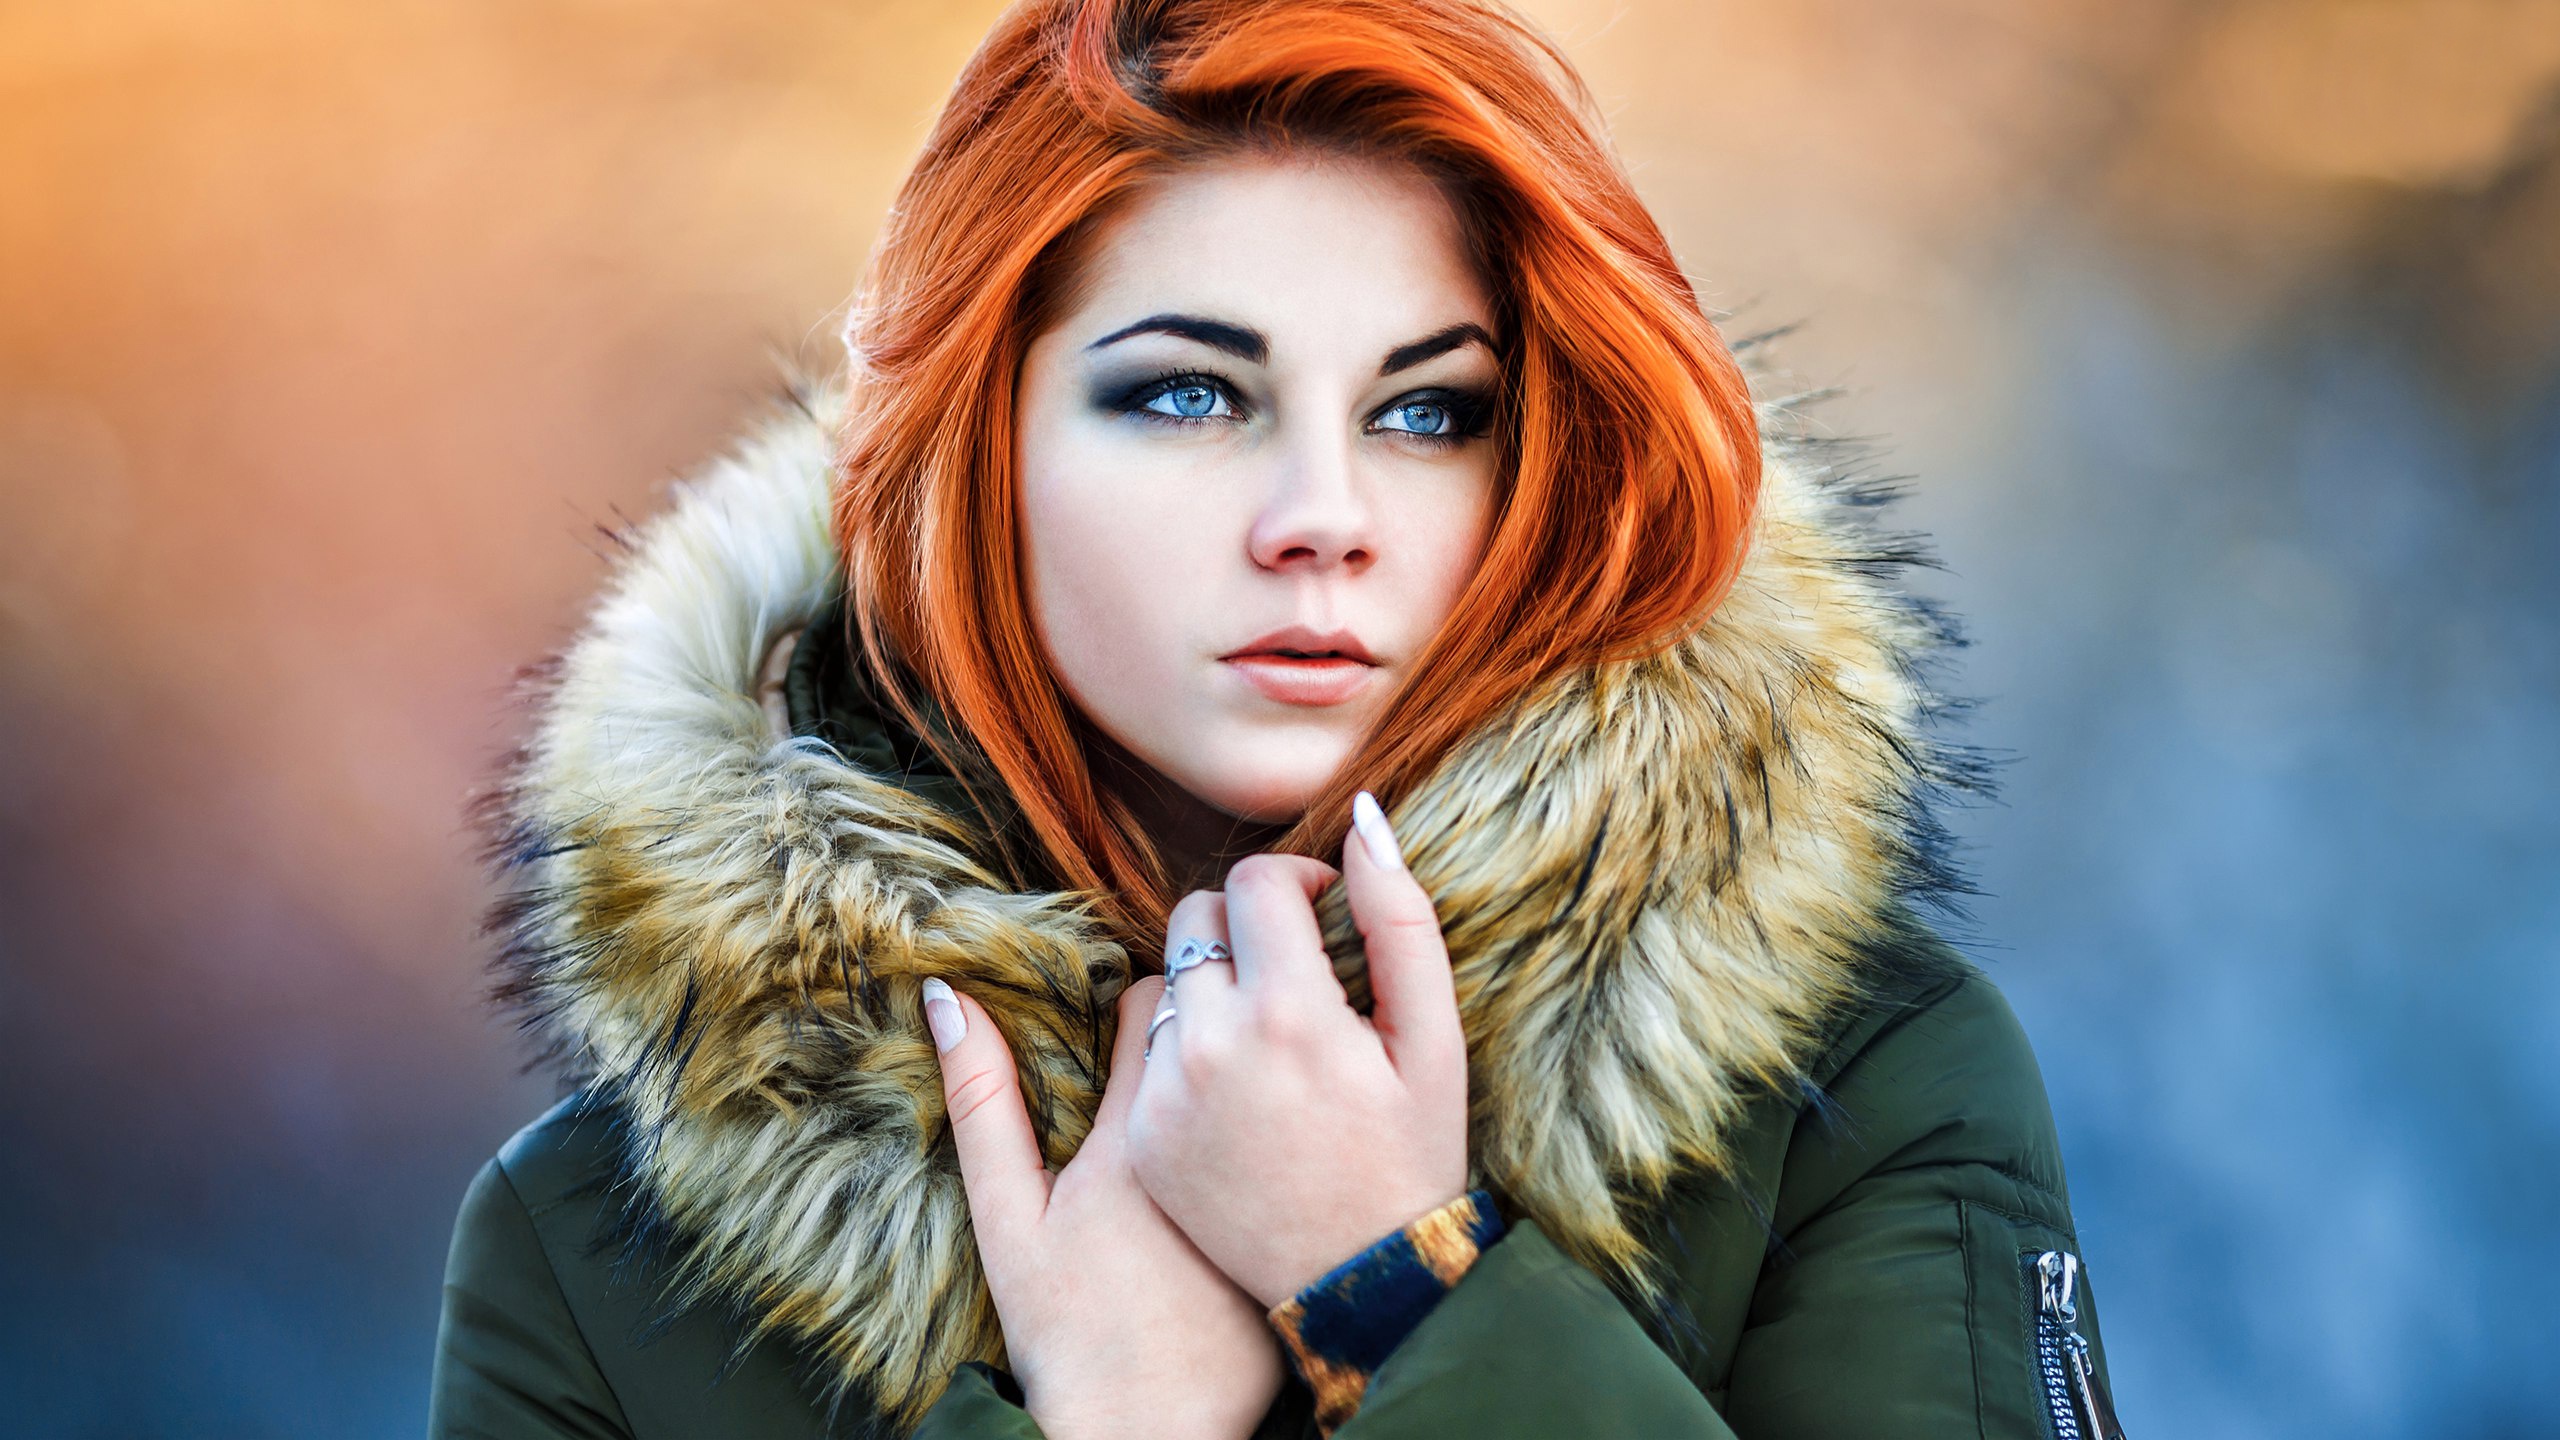 People 2560x1440 women model redhead depth of field fur green jacket jacket looking into the distance looking away blue eyes